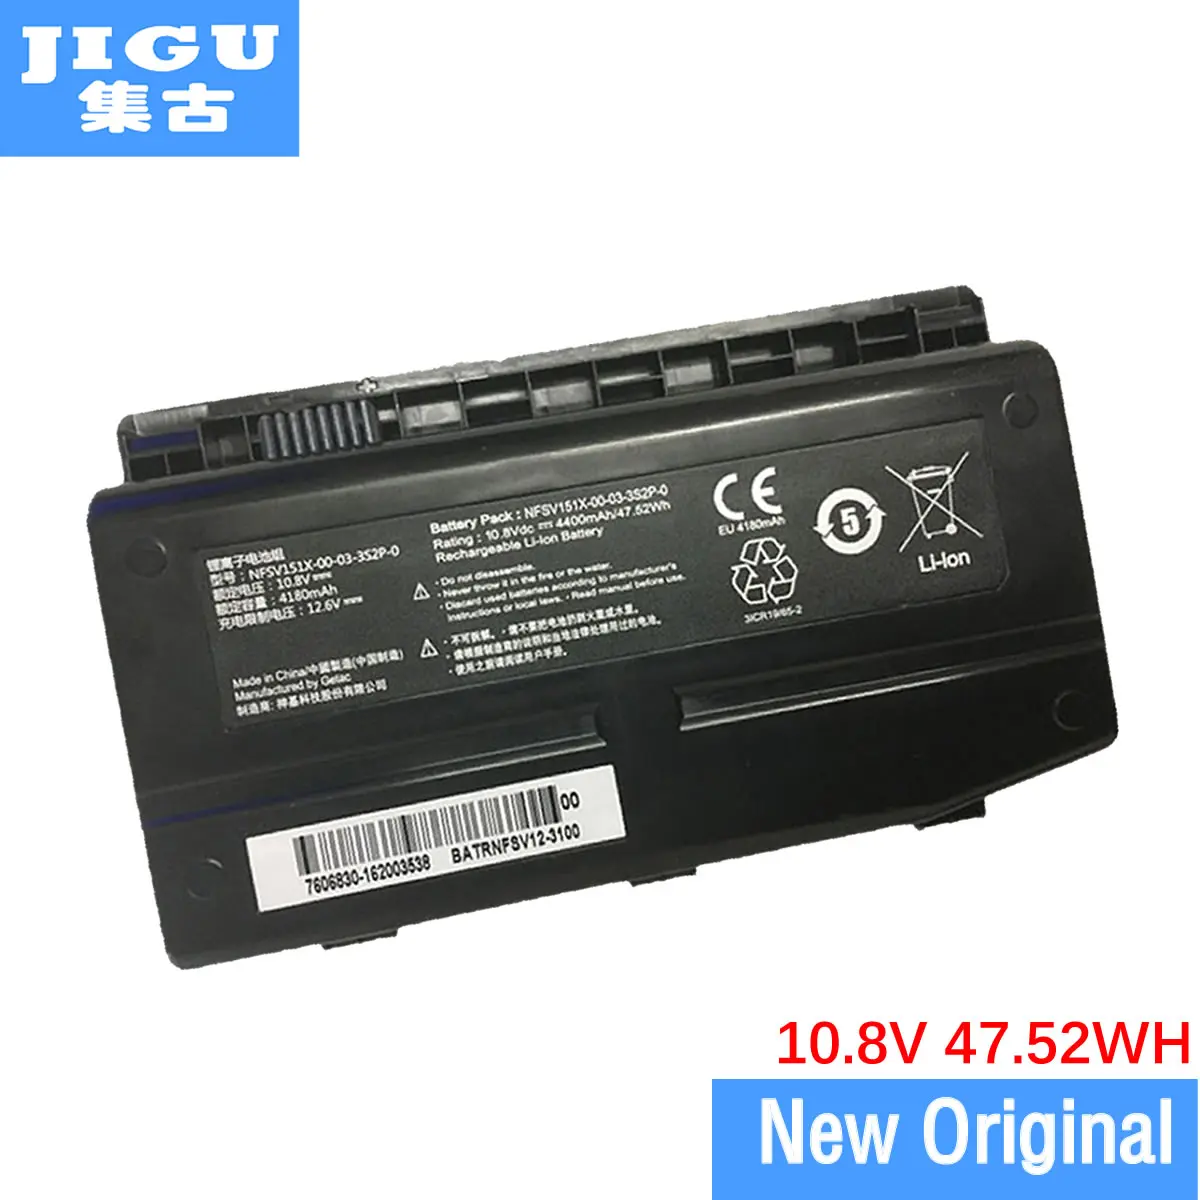 

JIGU 10.8V 47.52WH 7550830-160201791 BATRNFSV12-3100 GE5SN-00-01-3S2P-1 ORIGNAL Laptop Battery For MECHREVO MR X6 X6Ti-S